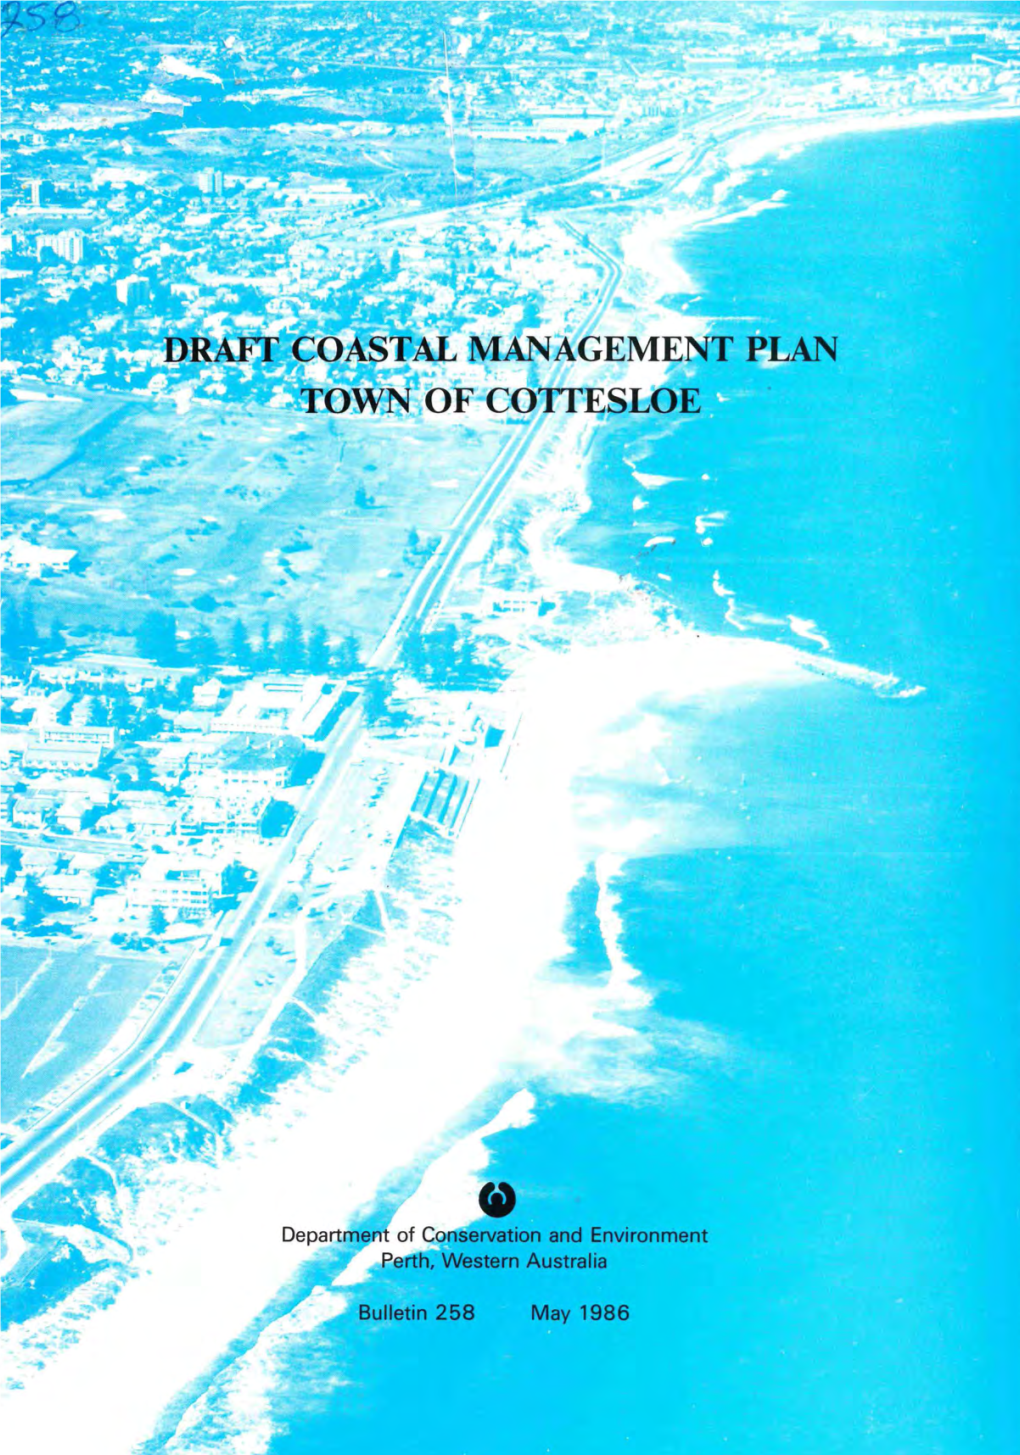 May 1986 Draft Coastal Management Plan